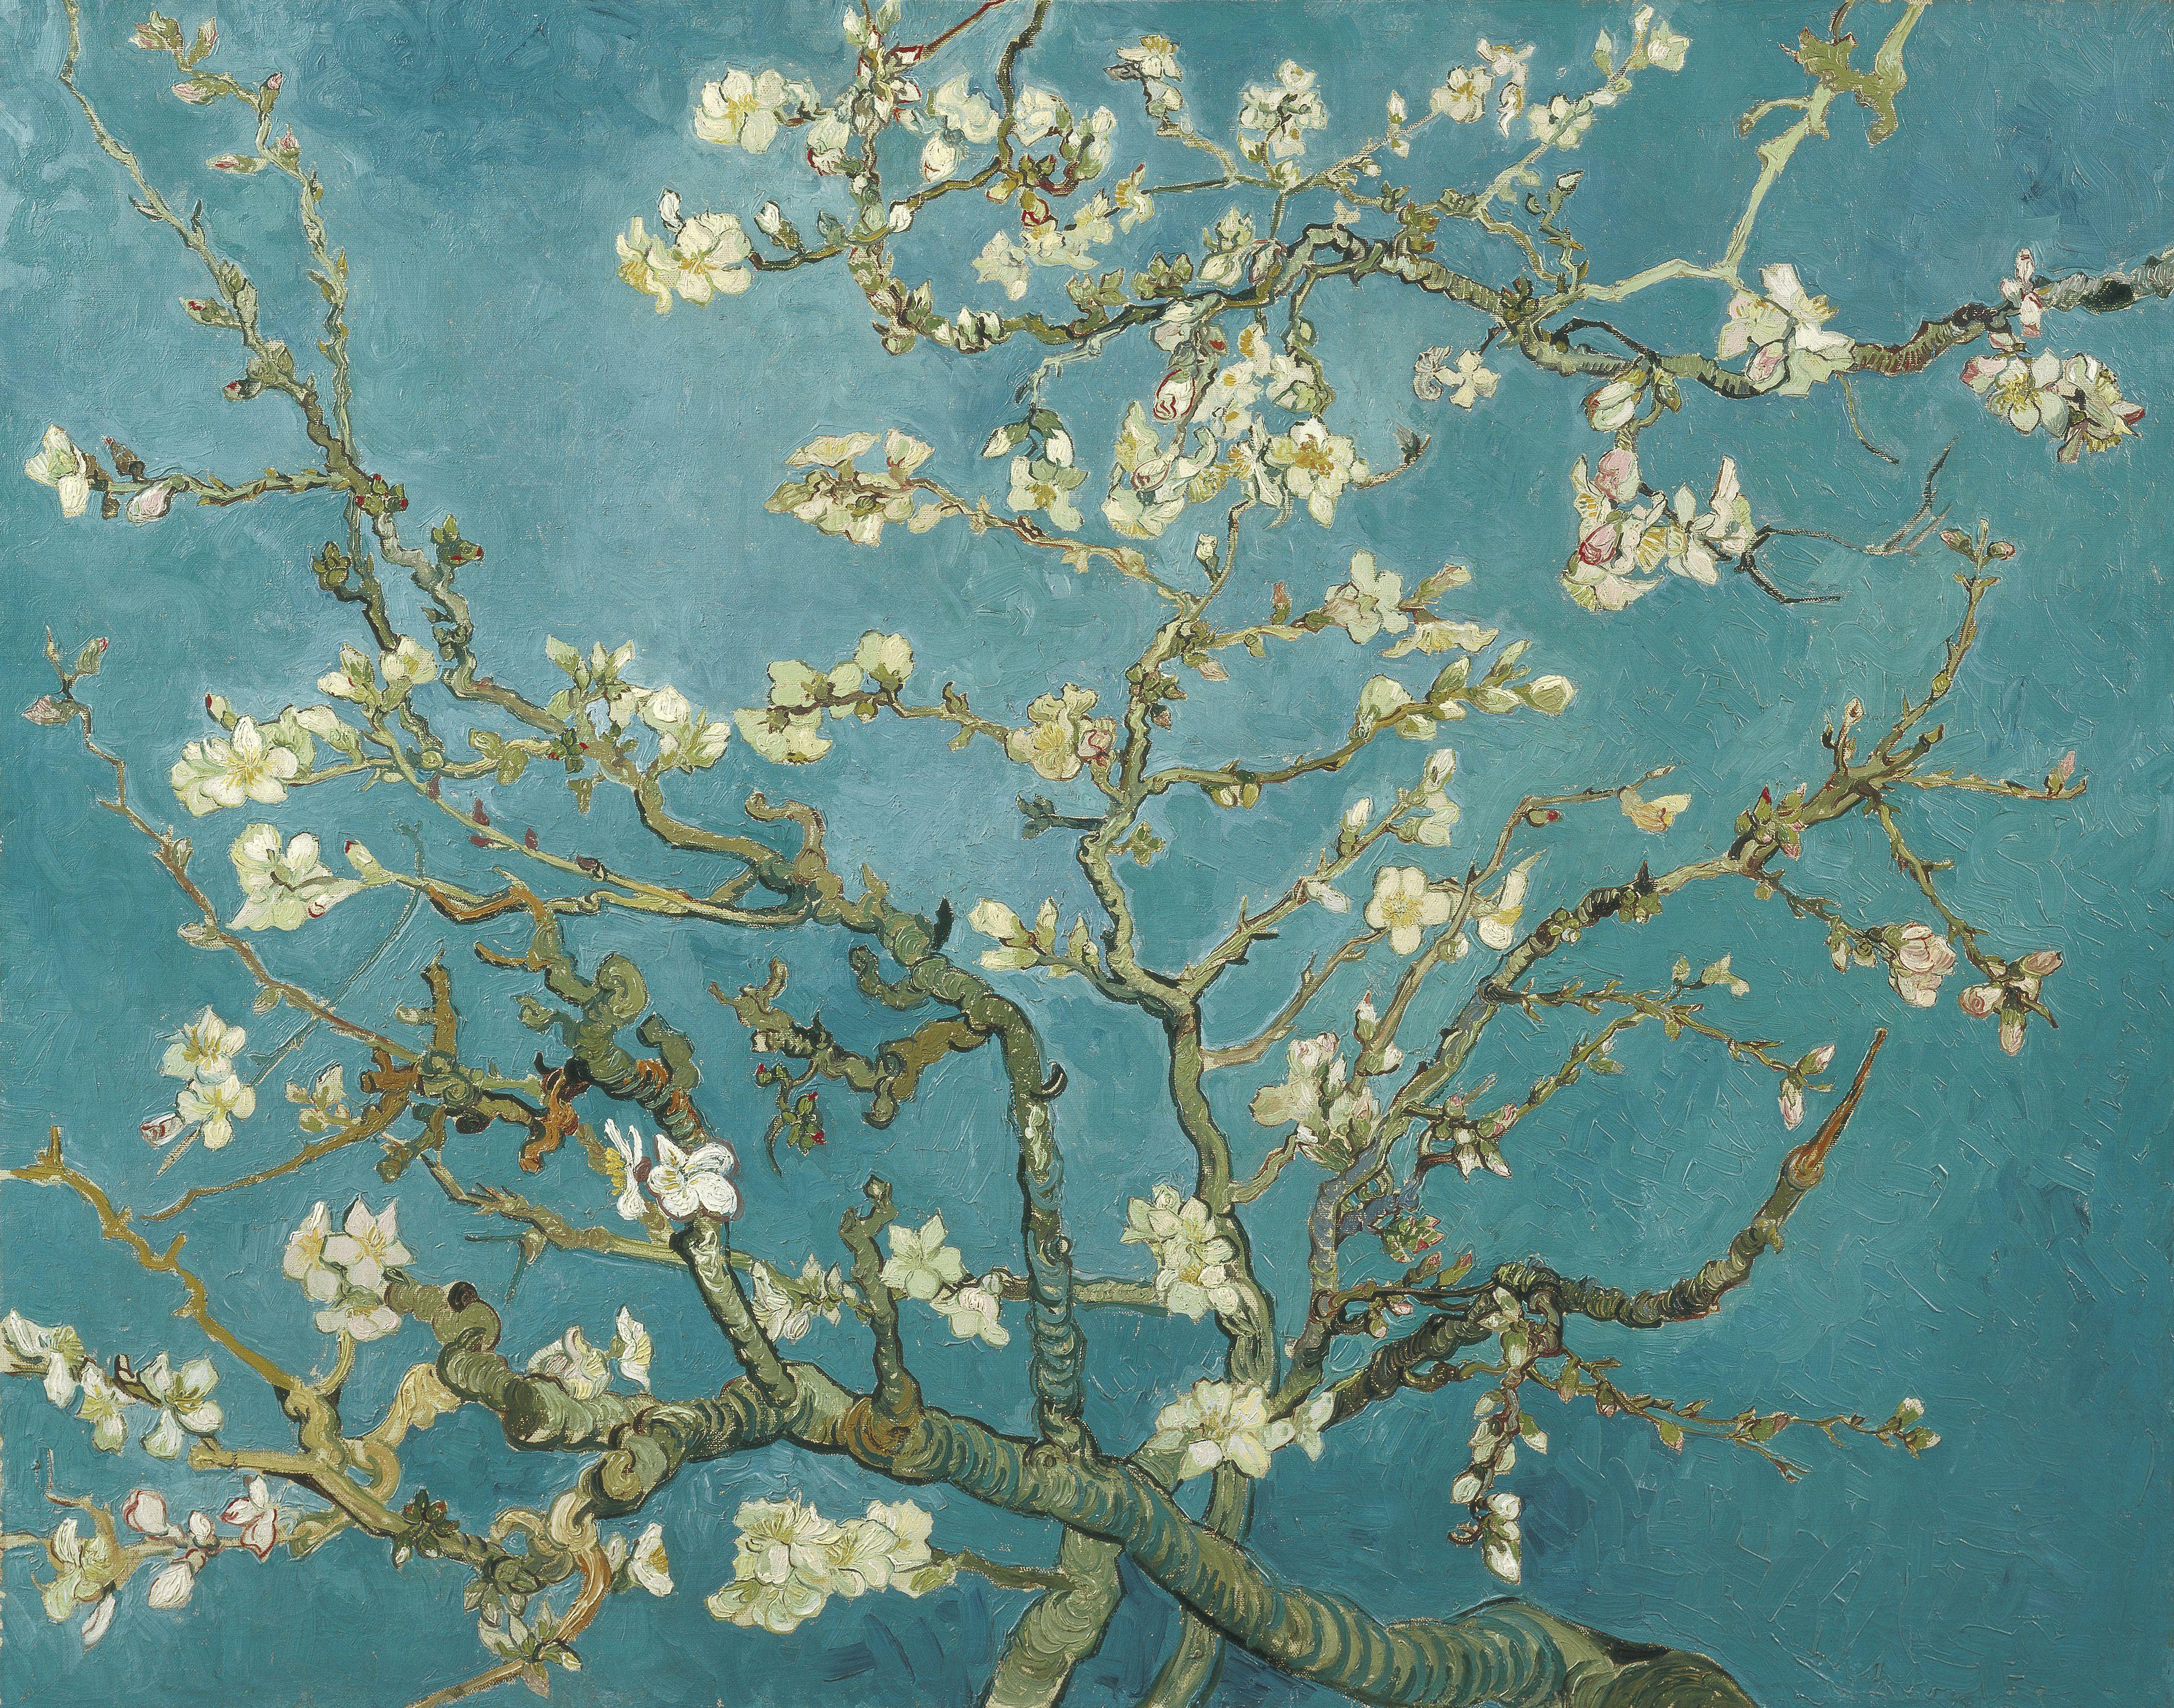 File:Vincent van Gogh - Almond Blossom - VGM F671.jpg - Wikimedia ...